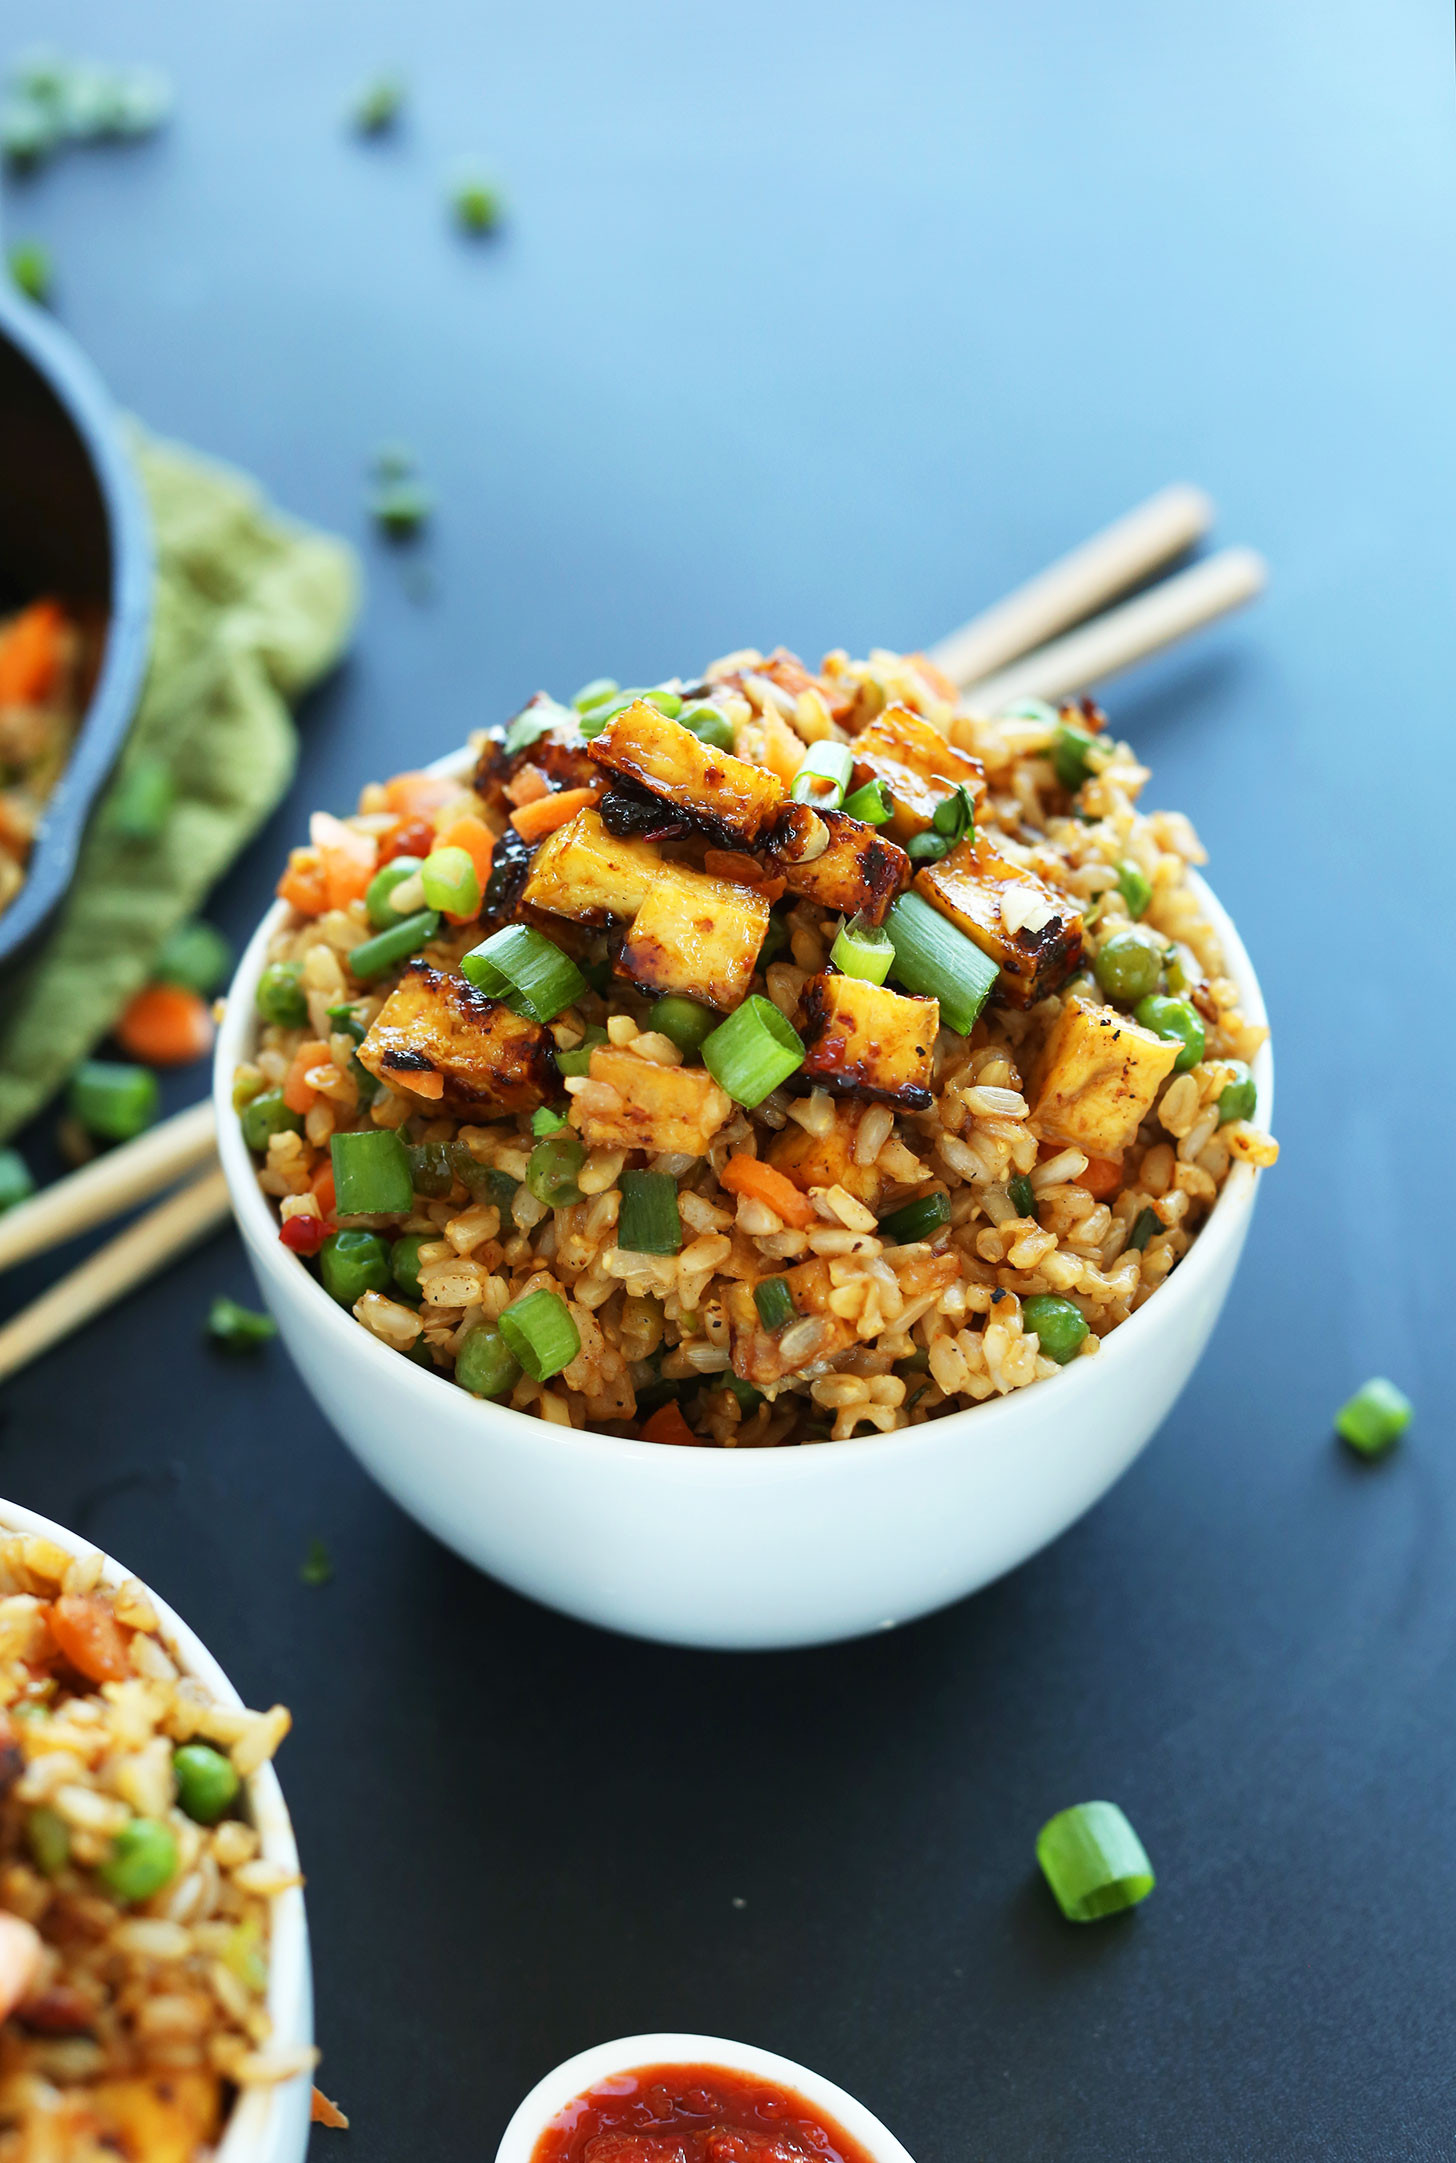 Chinese Vegetarian Recipes With Tofu
 Vegan Fried Rice